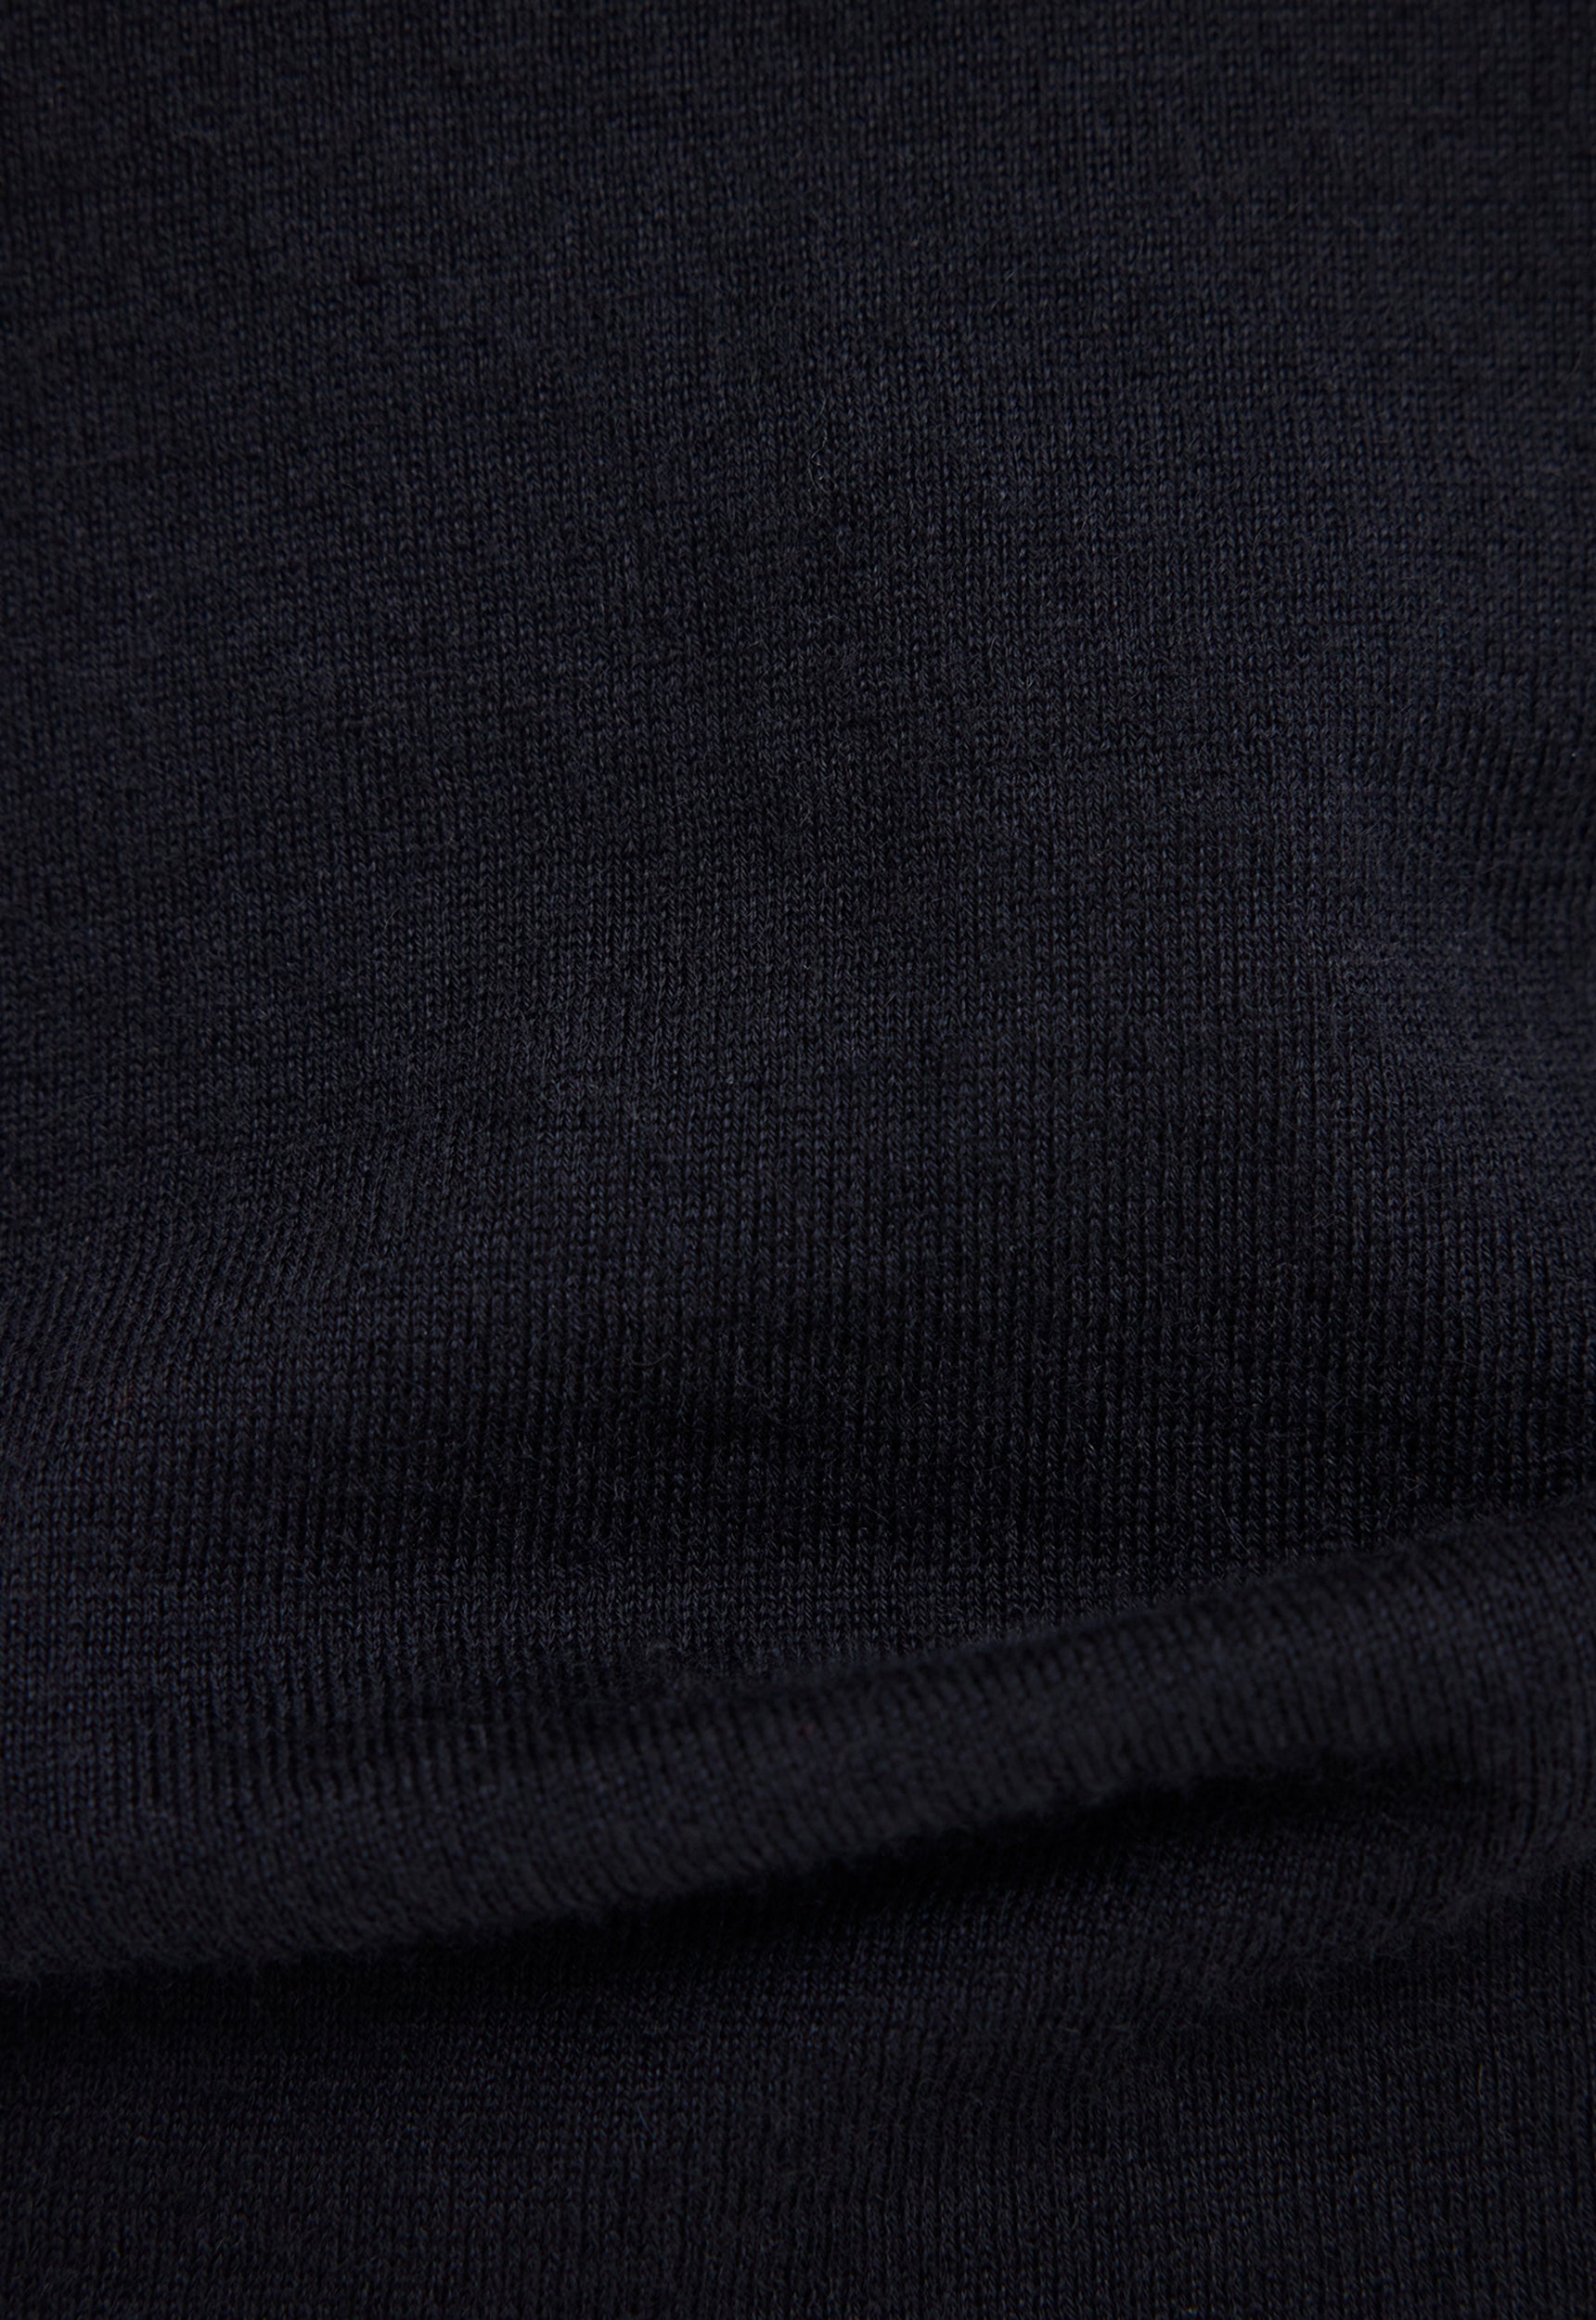 Elco Cashmere Sweater in Black